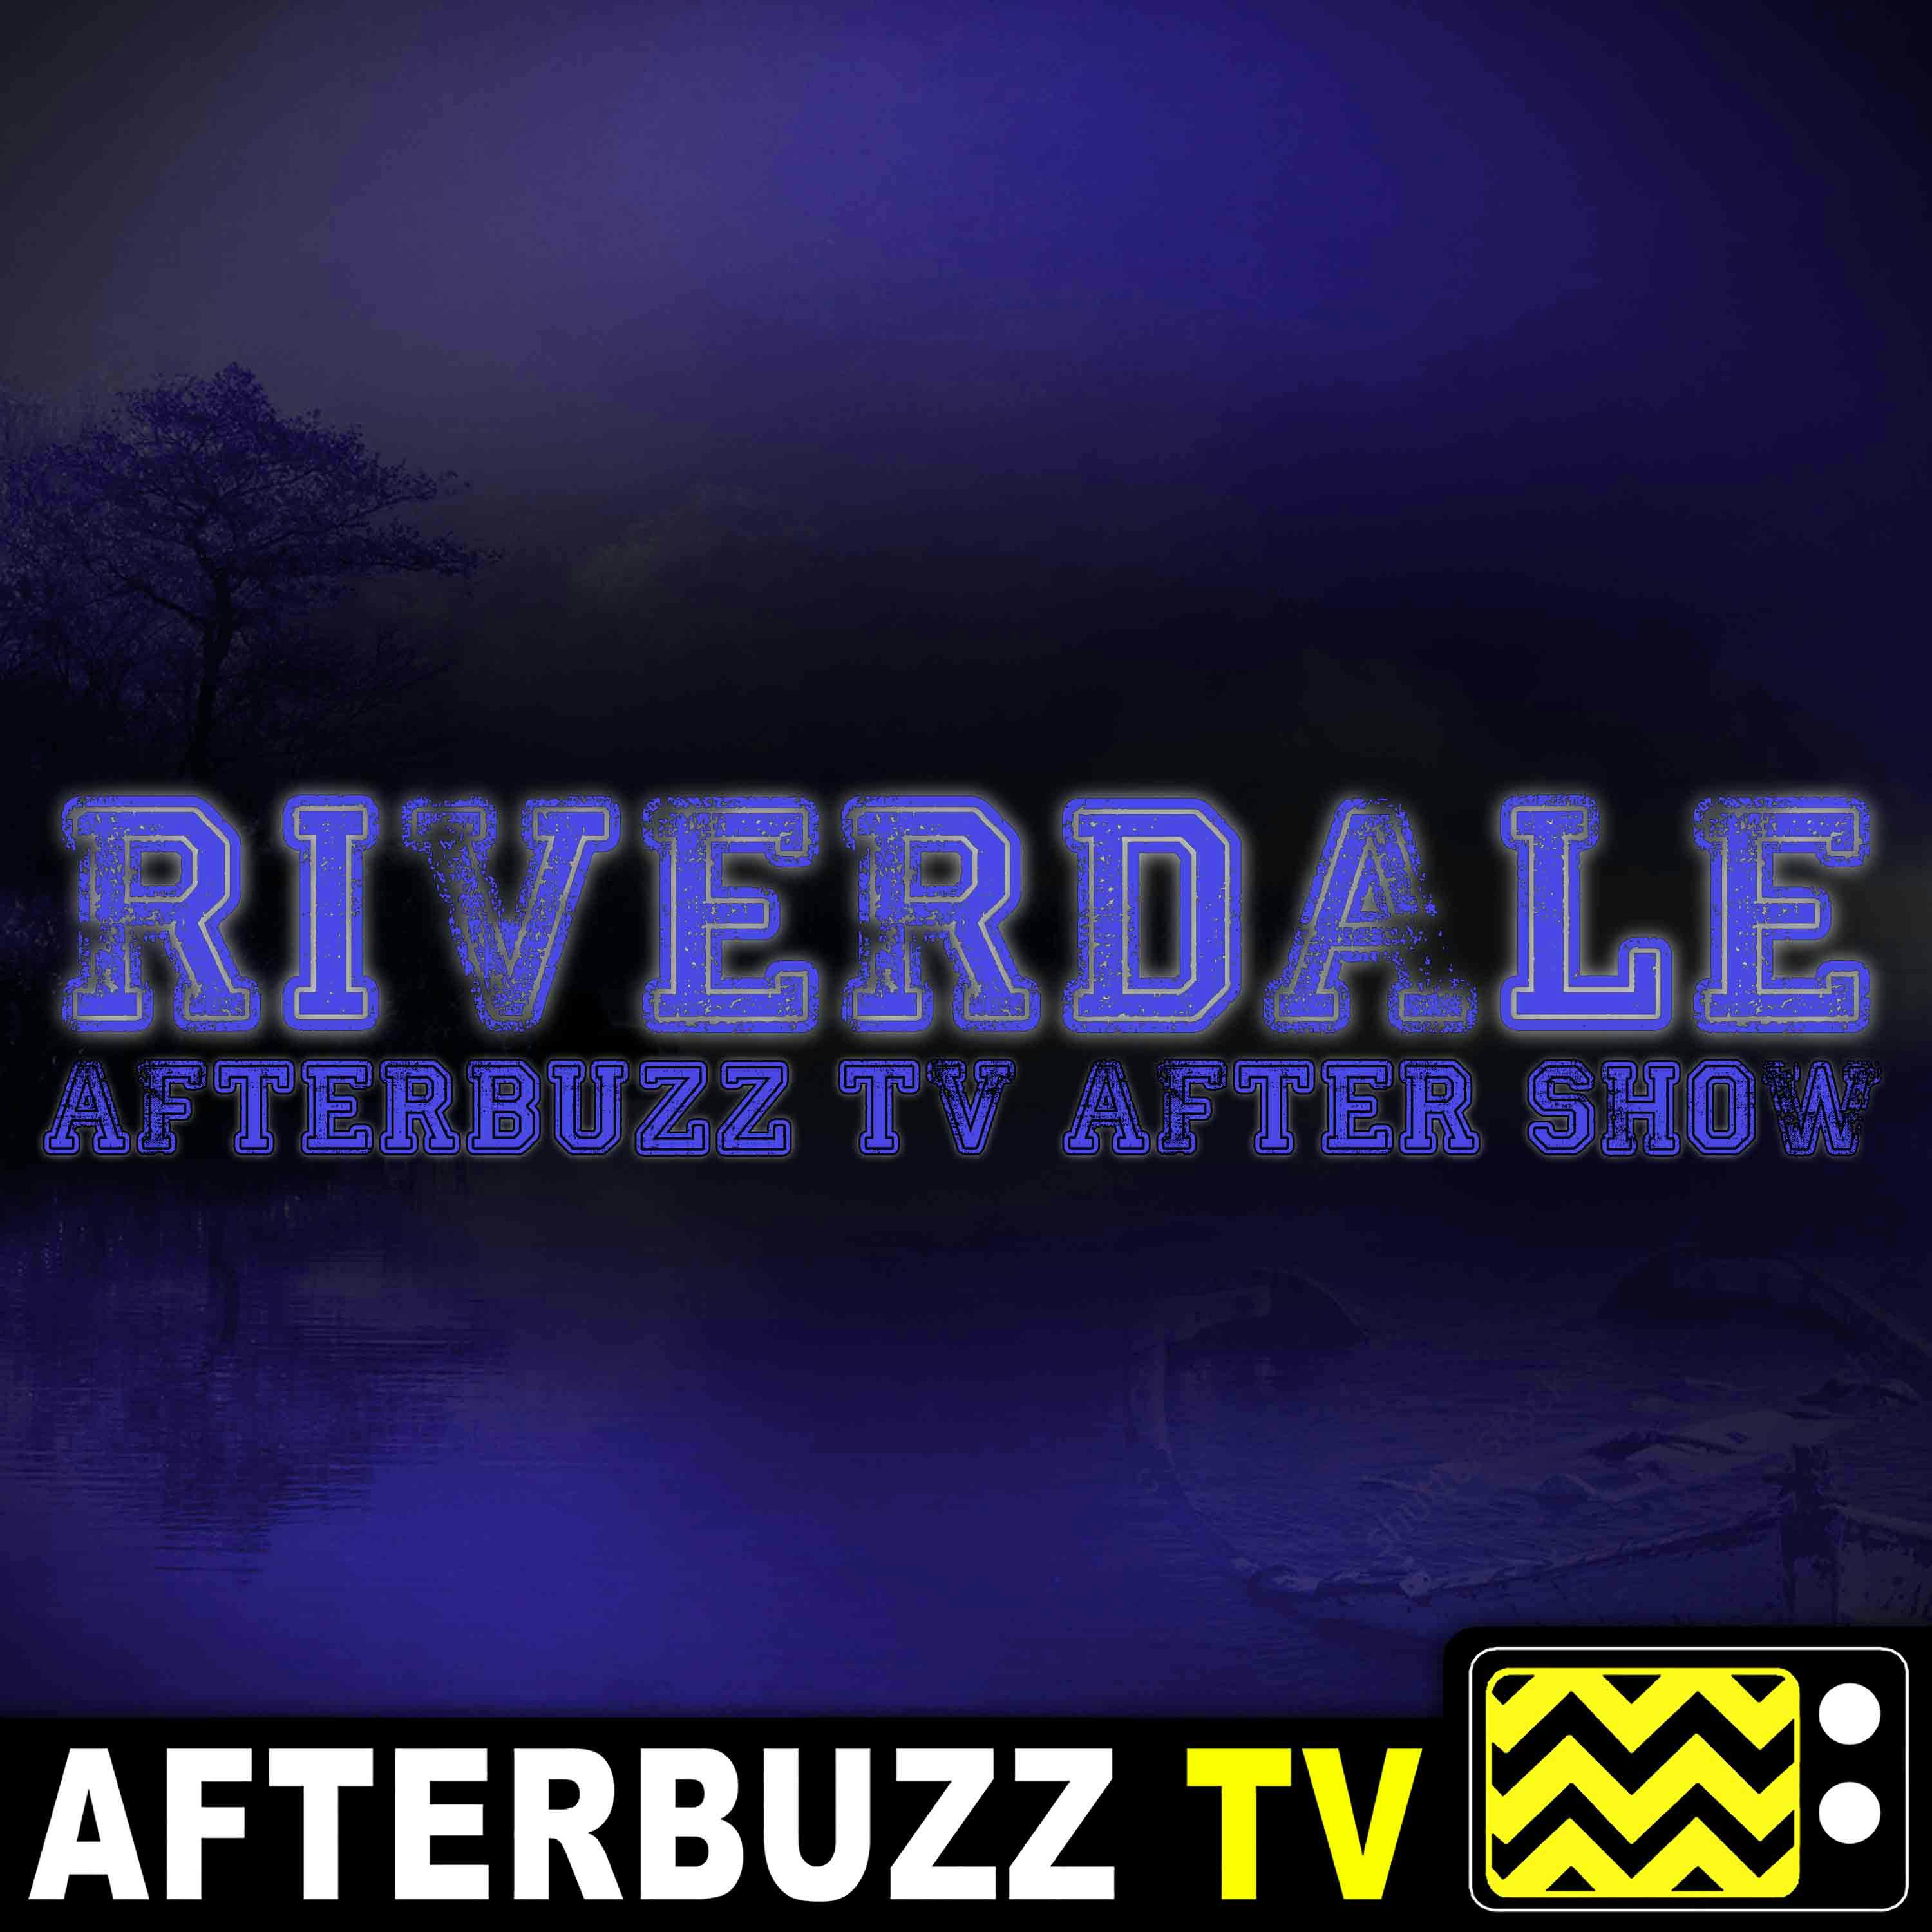 "Fast Times at Riverdale High" Season 4 Episode 2 'Riverdale' Review